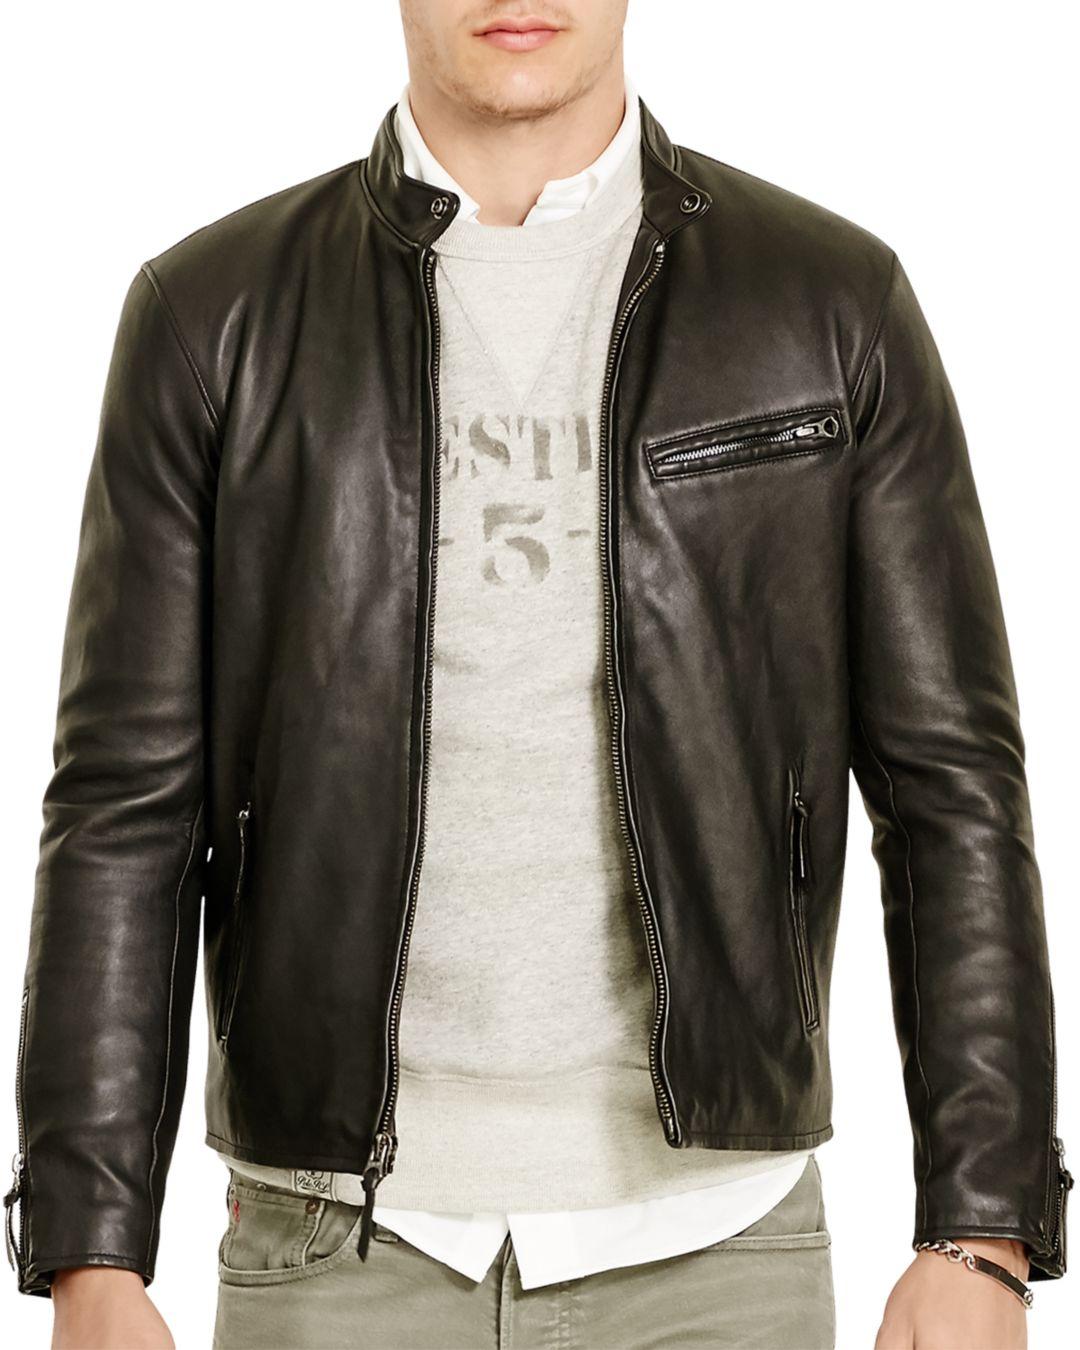 Polo Ralph Lauren Lambskin Leather Café Racer Jacket in Black for Men ...